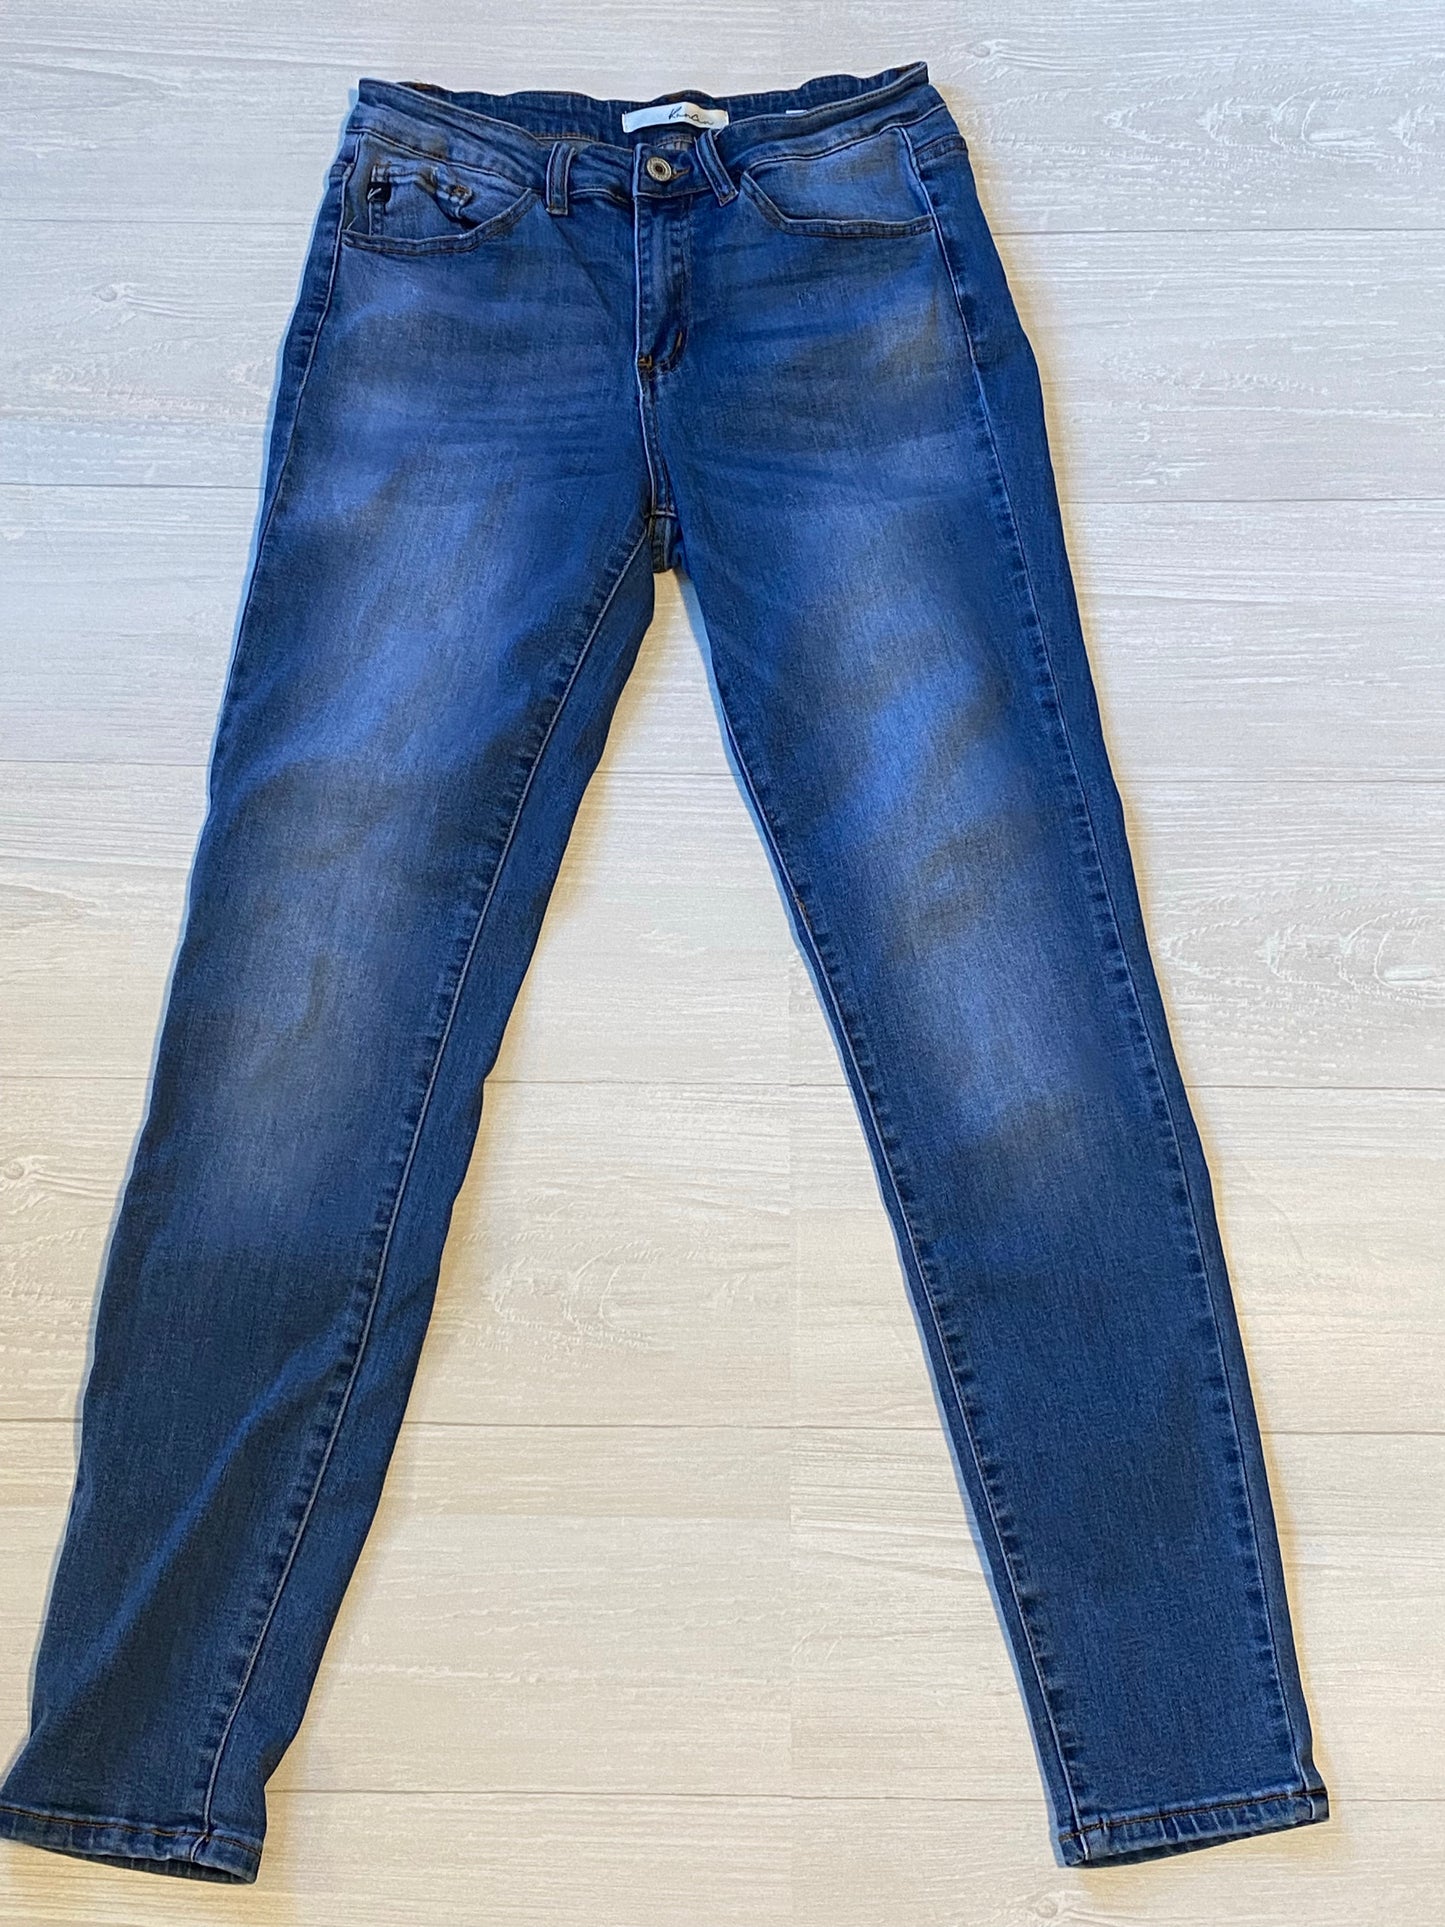 KanKan Medium Wash Jeans - 9/28